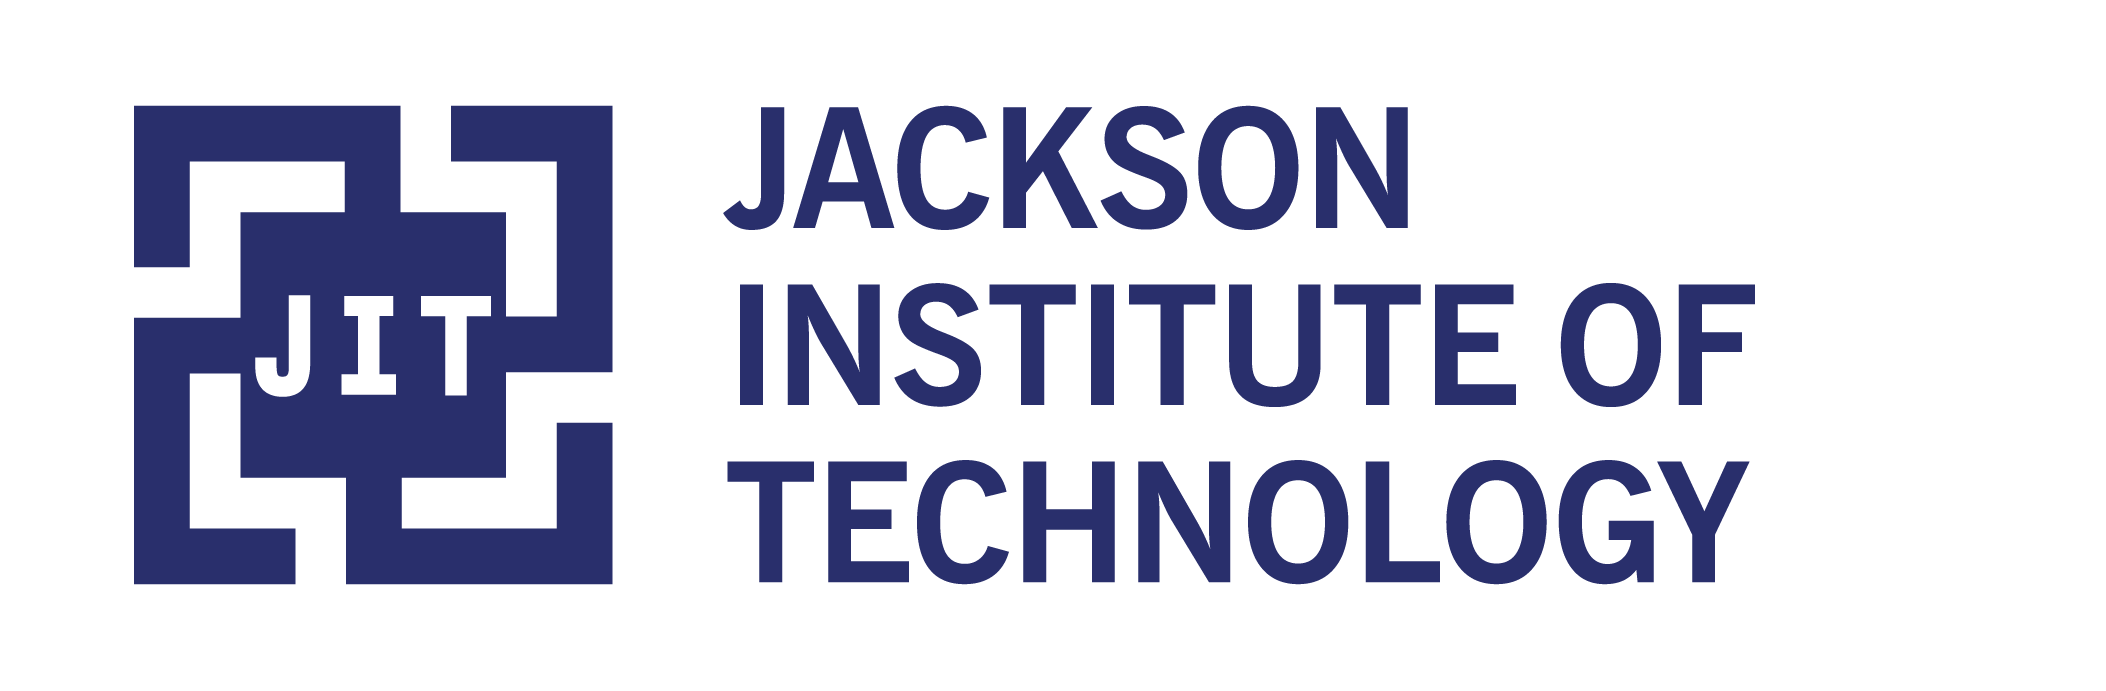 Jackson Institute of Technology